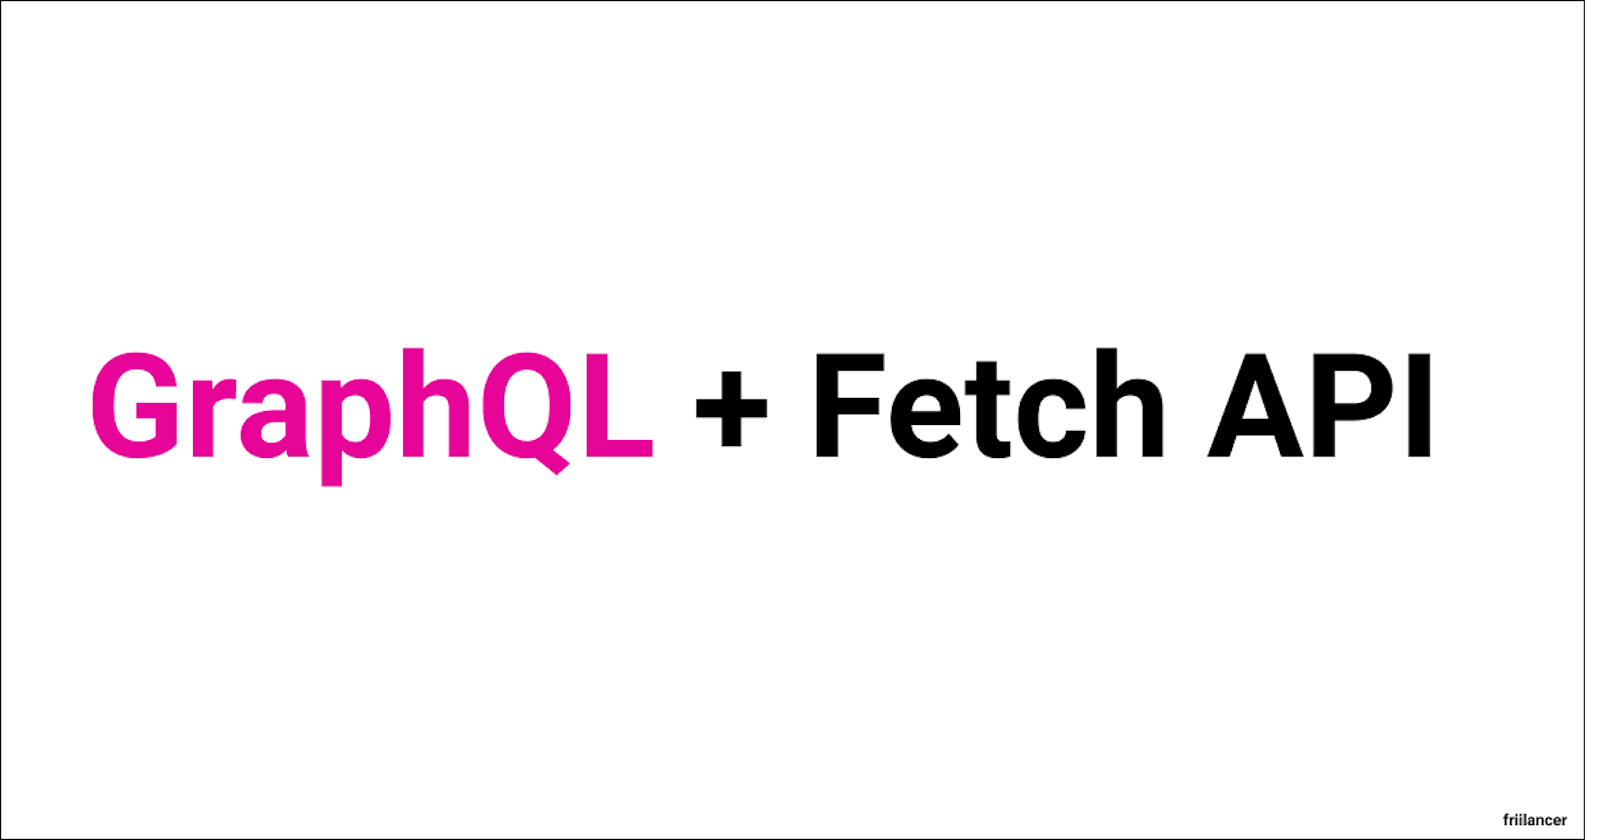 Fetching data from a GraphQL API using the Fetch API